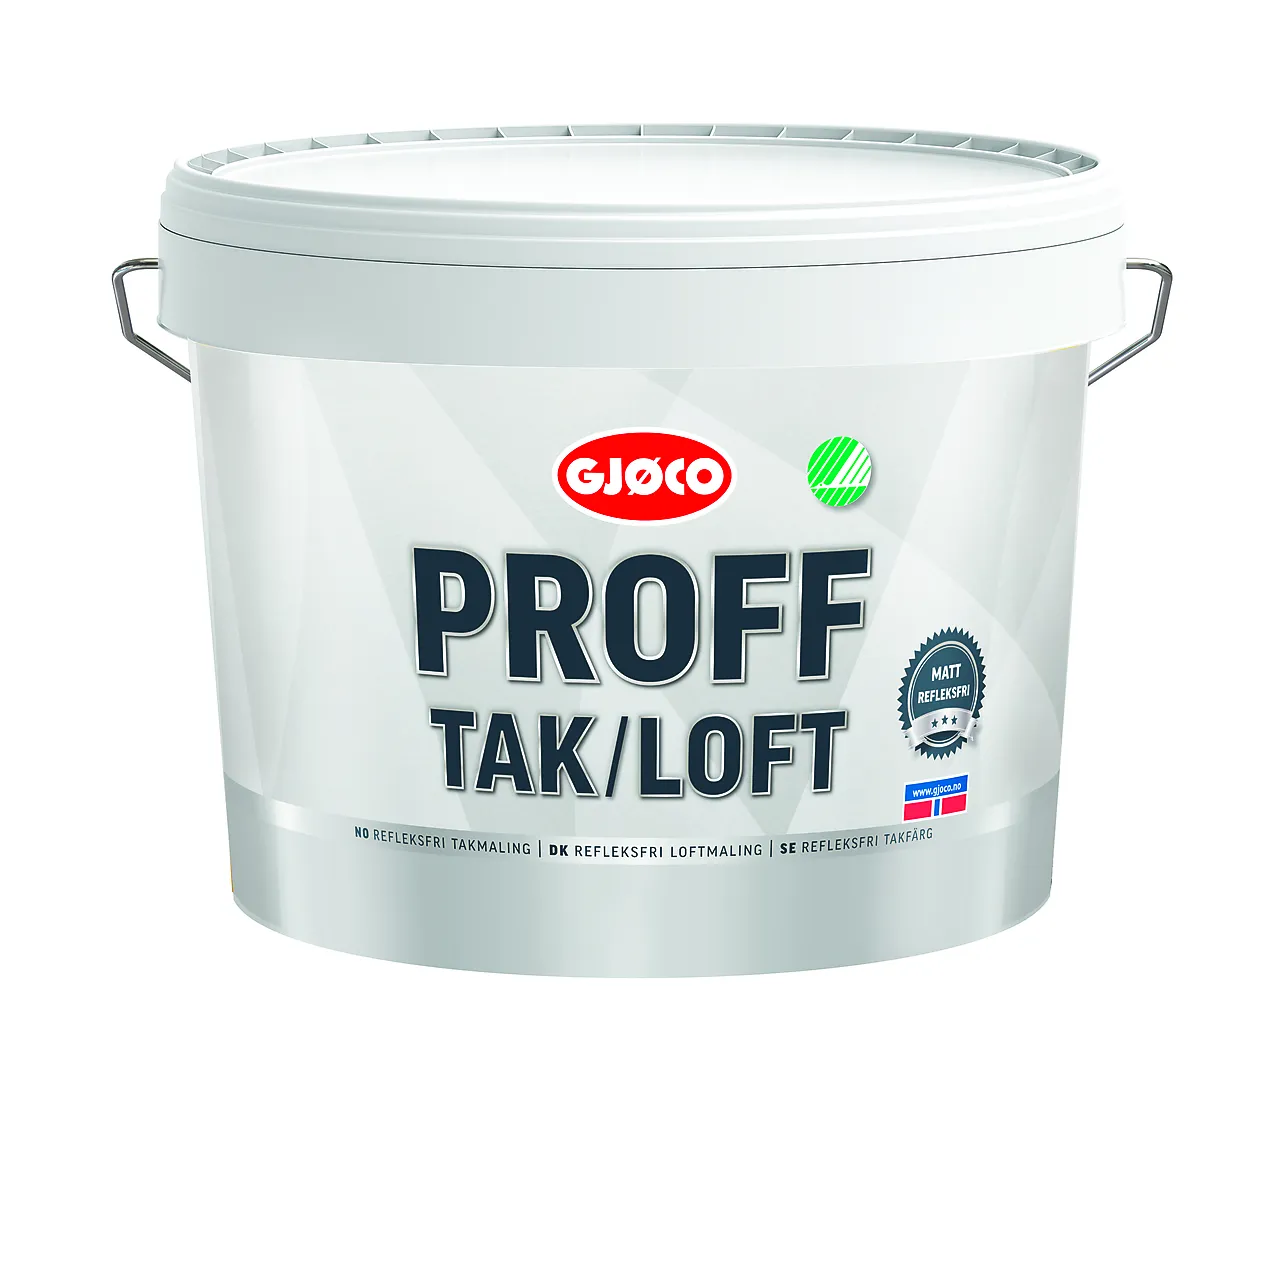 Proff tak/loft hvit 9l maling gjøco